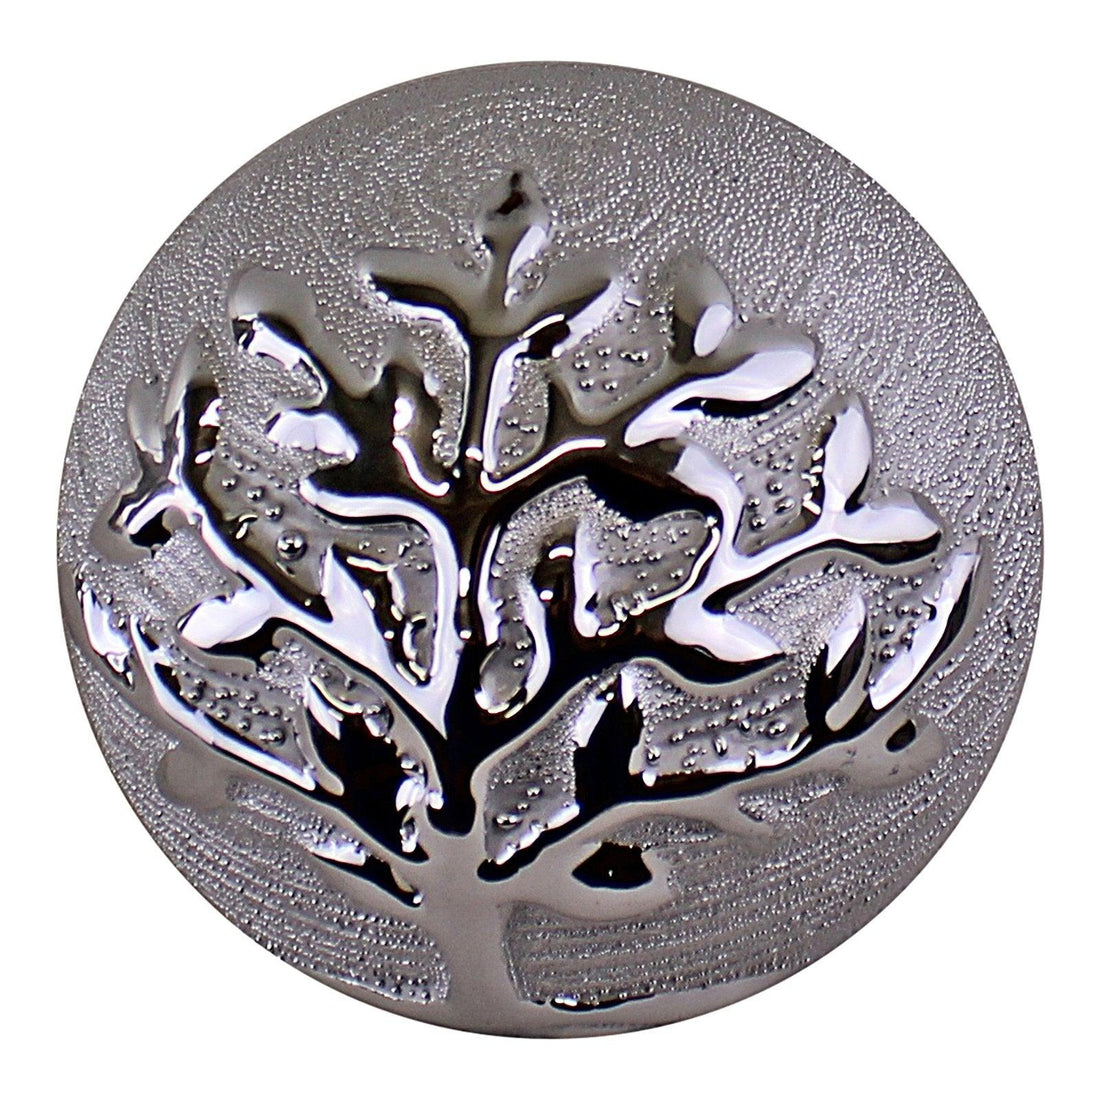 Tree Of Life Spherical Ornament 10cm - £15.99 - Tree Of Life 